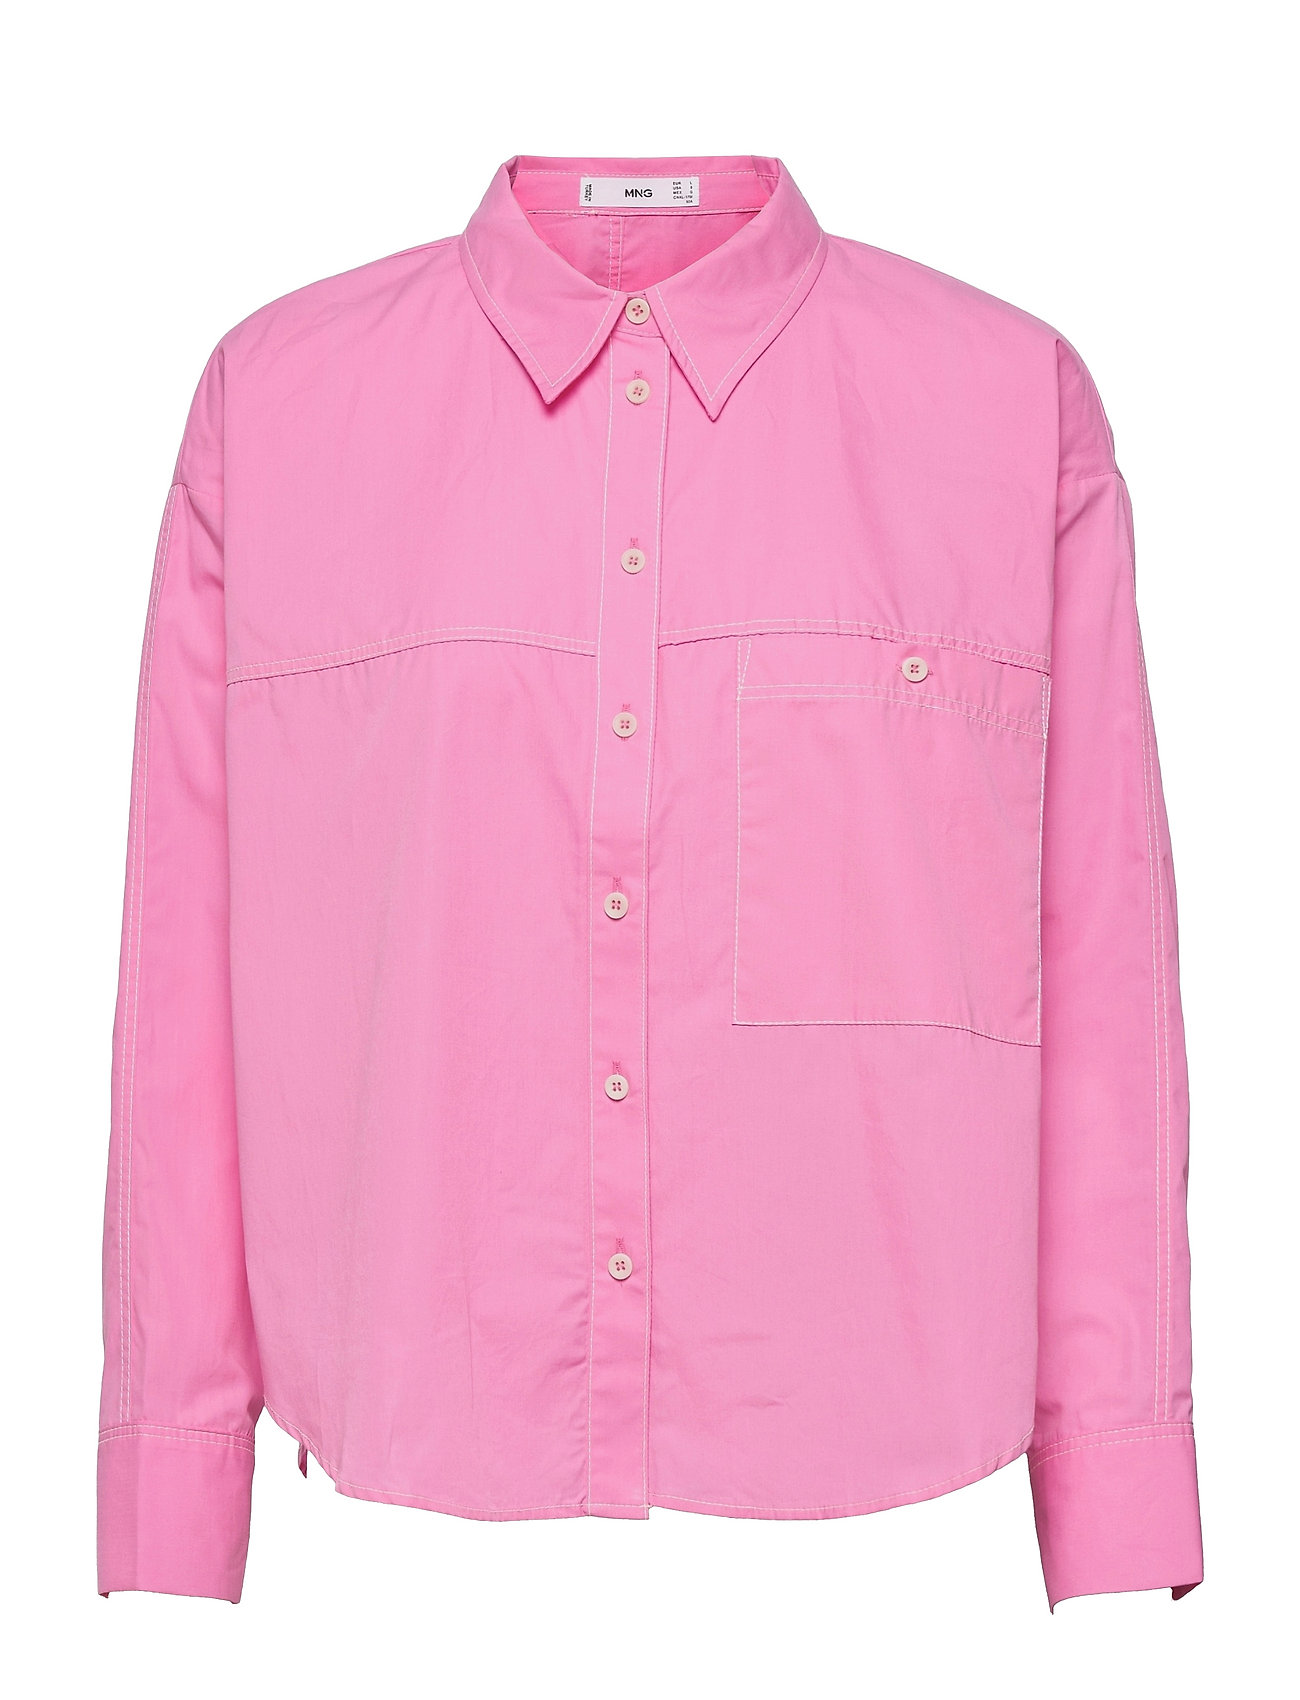 Leon Tops Shirts Long-sleeved Pink Mango